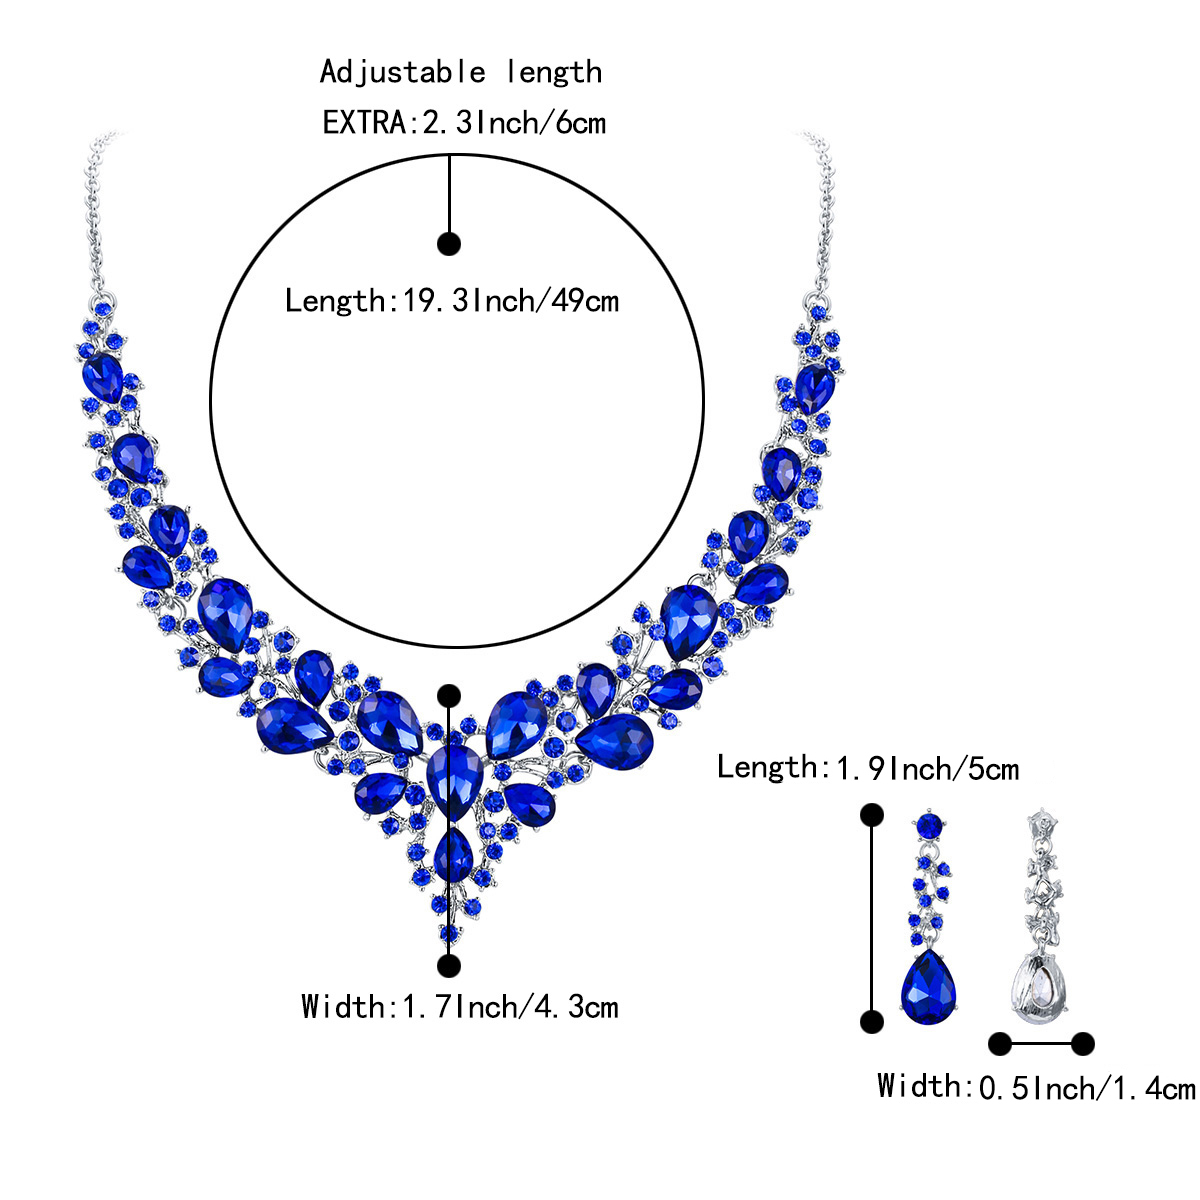 Wedure Wedding Bridal Necklace Earrings Jewelry Set for Women, Austrian Crystal Teardrop Cluster Statement Necklace Dangle Earrings Set Blue Silver-Tone - image 5 of 5